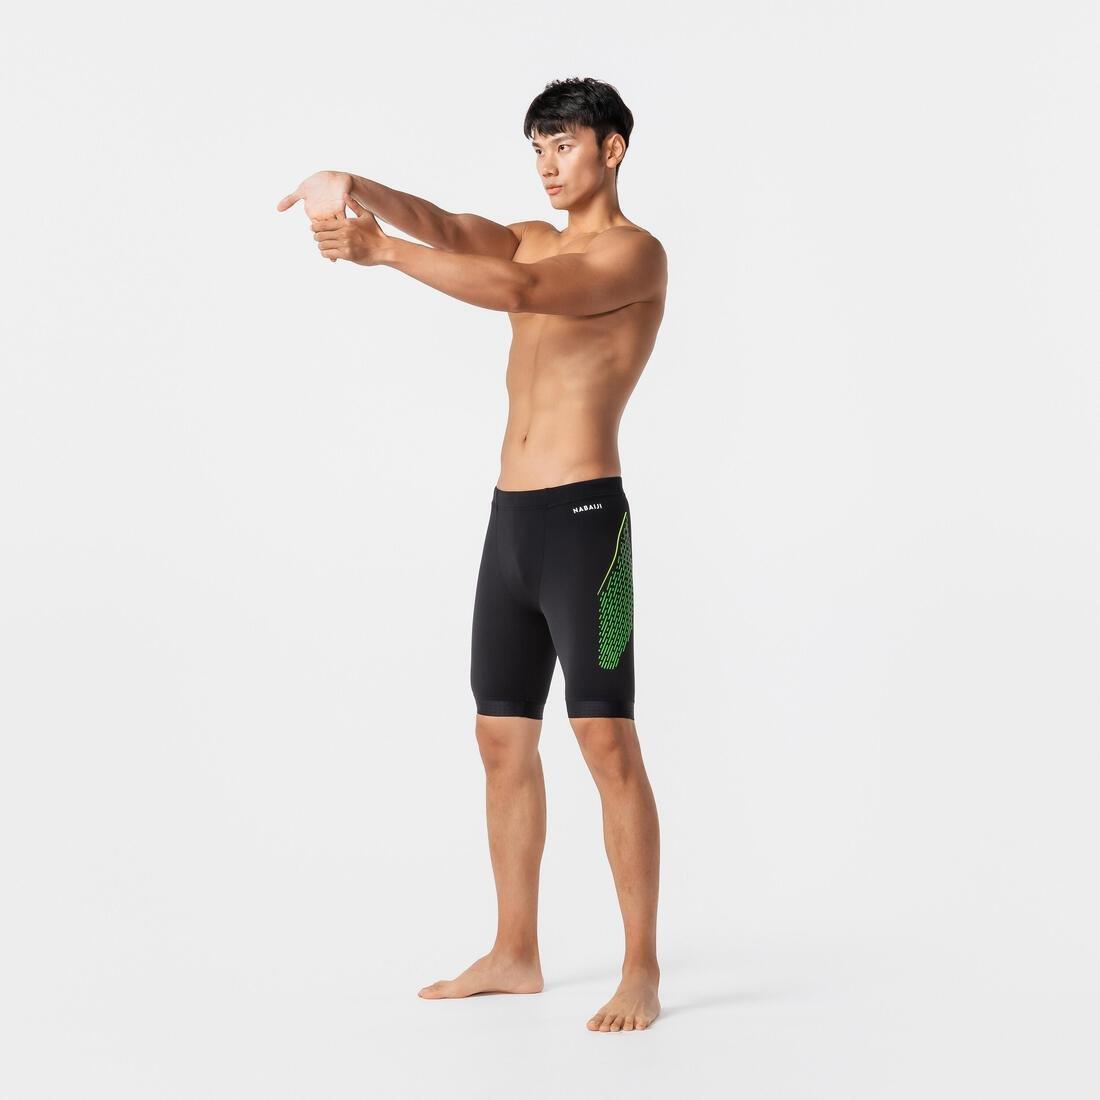 NABAIJI - Mens Swimming Jammer - Fiti 500, Black